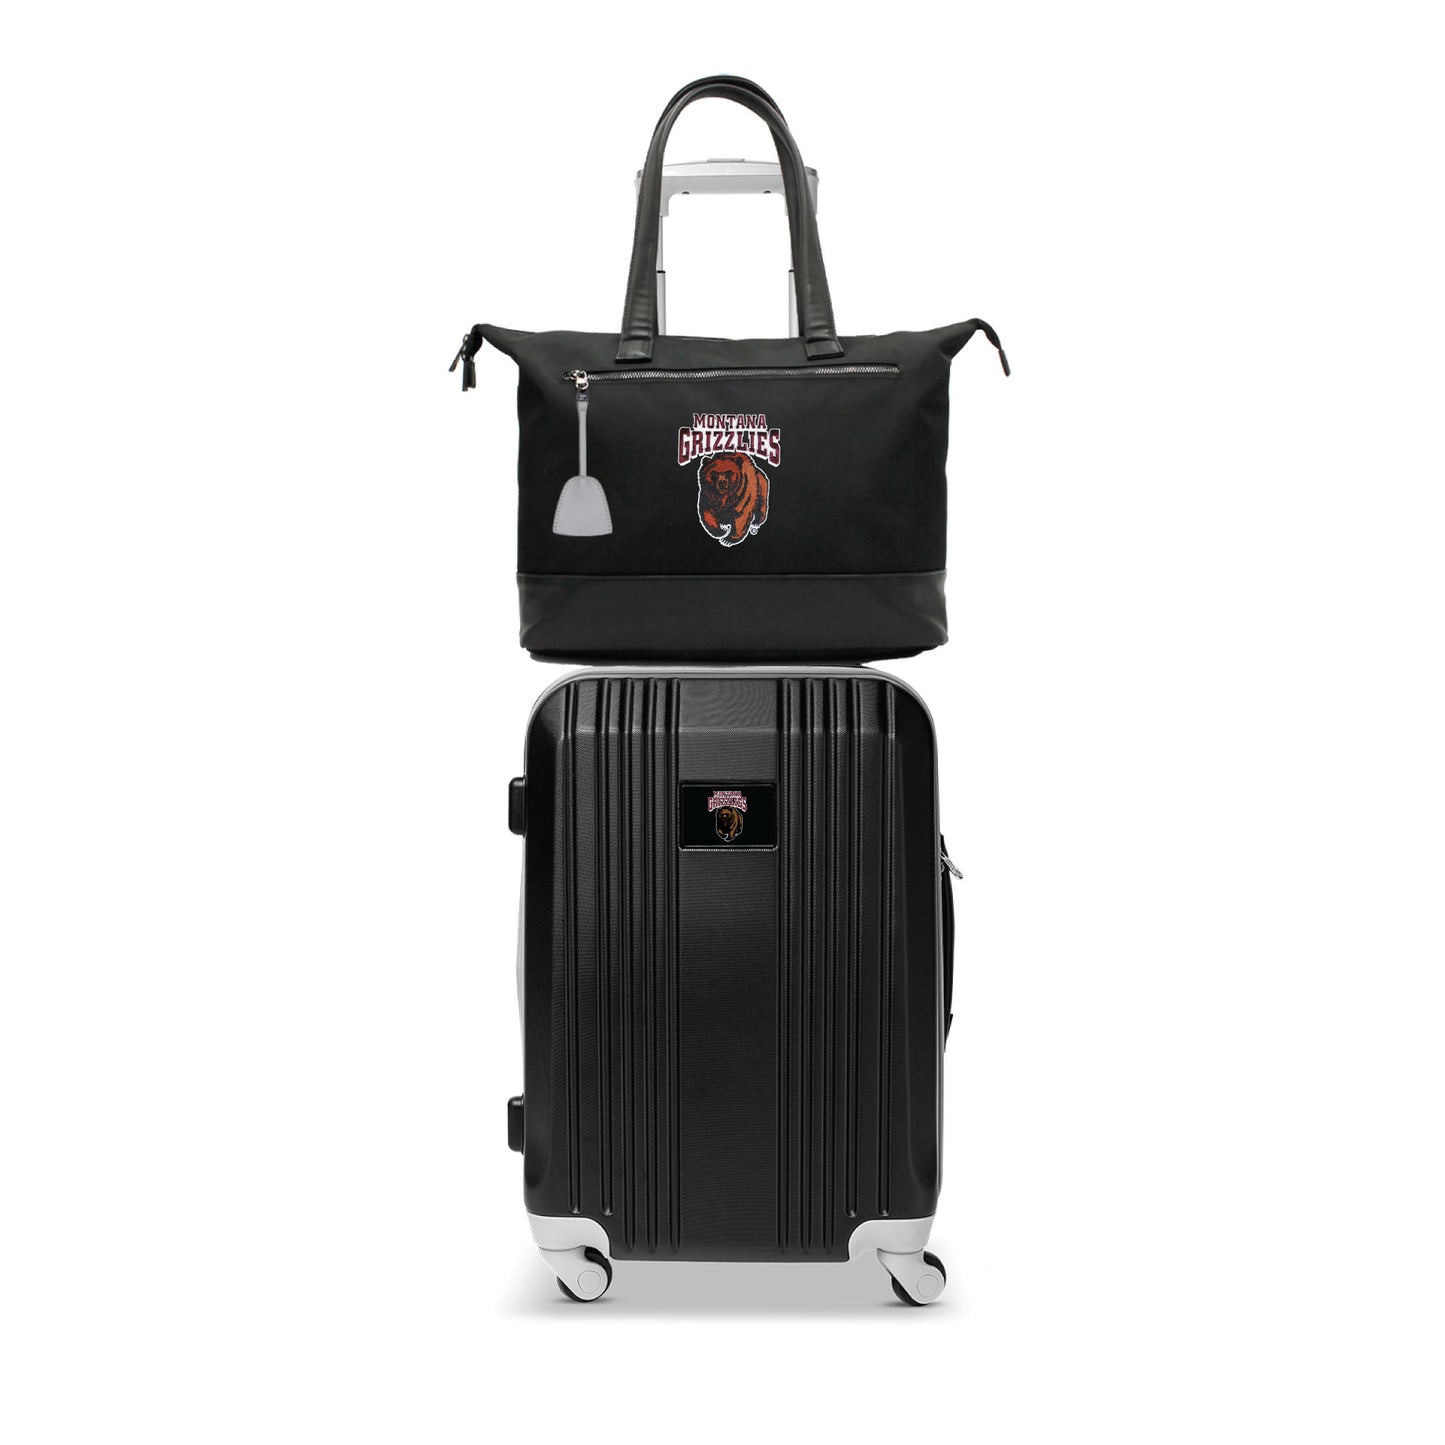 Montana Grizzlies Premium Laptop Tote Bag and Luggage Set